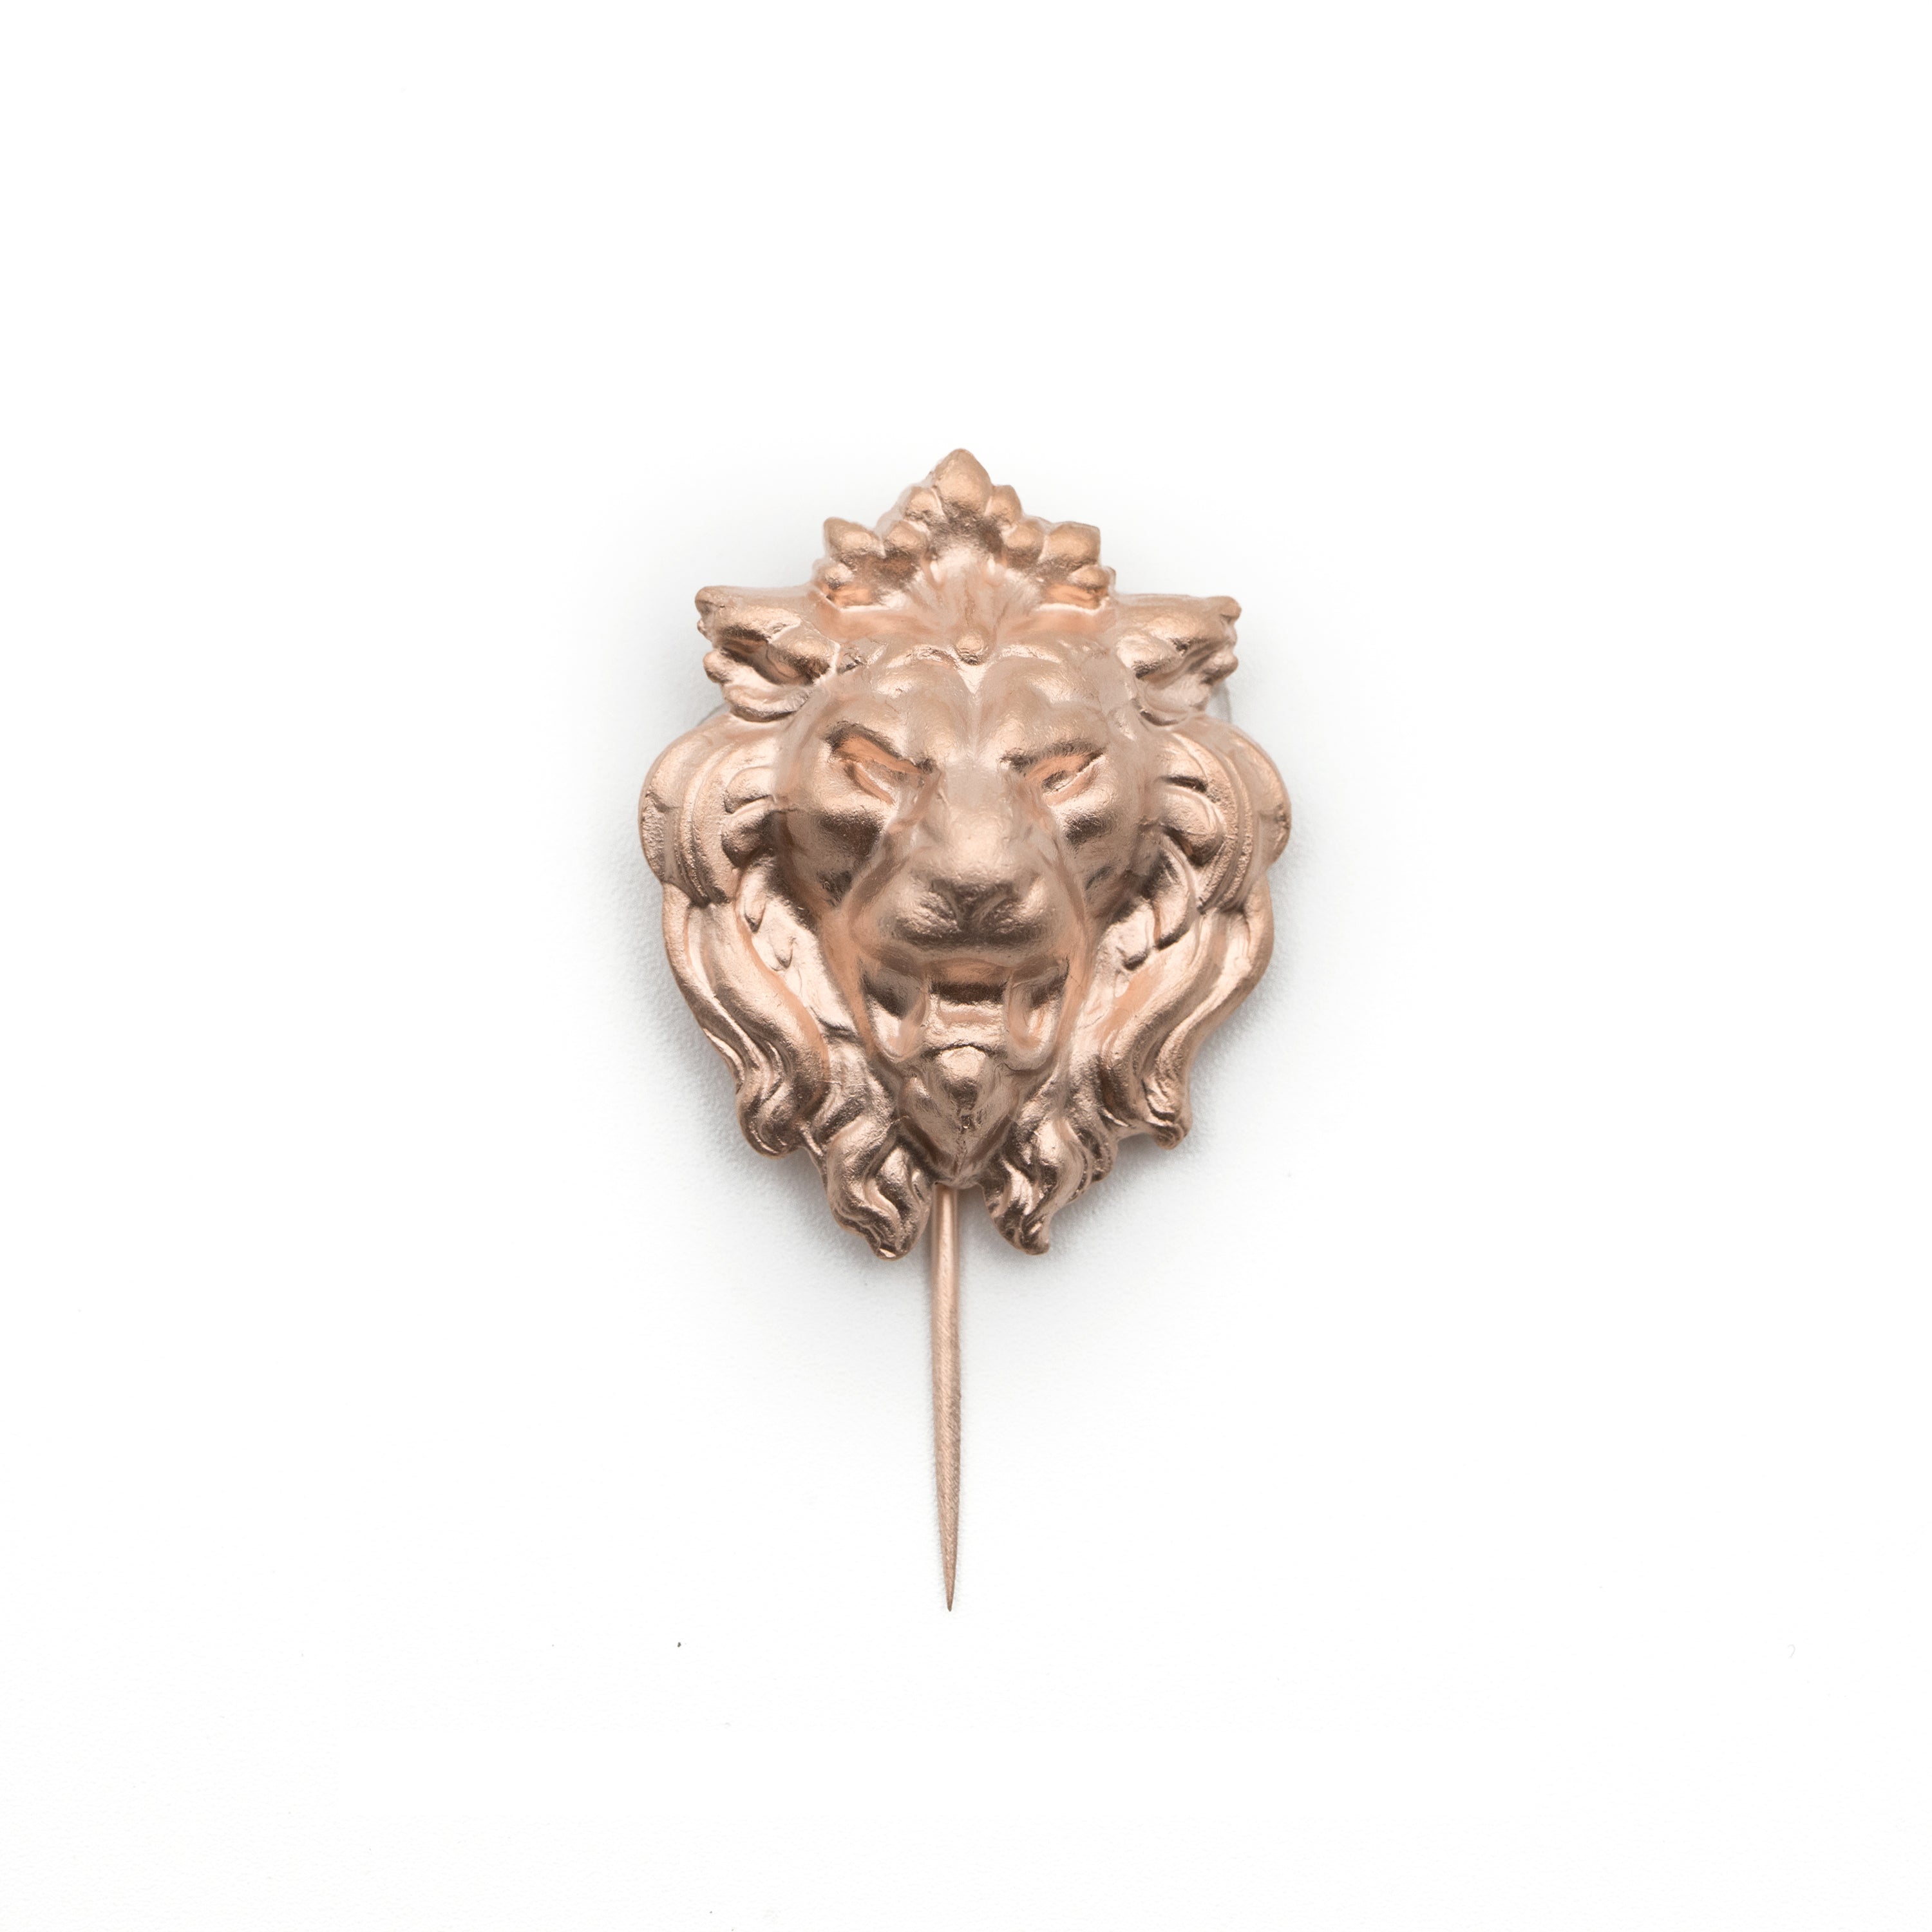 The Lion King Lapel Pin - Rose gold